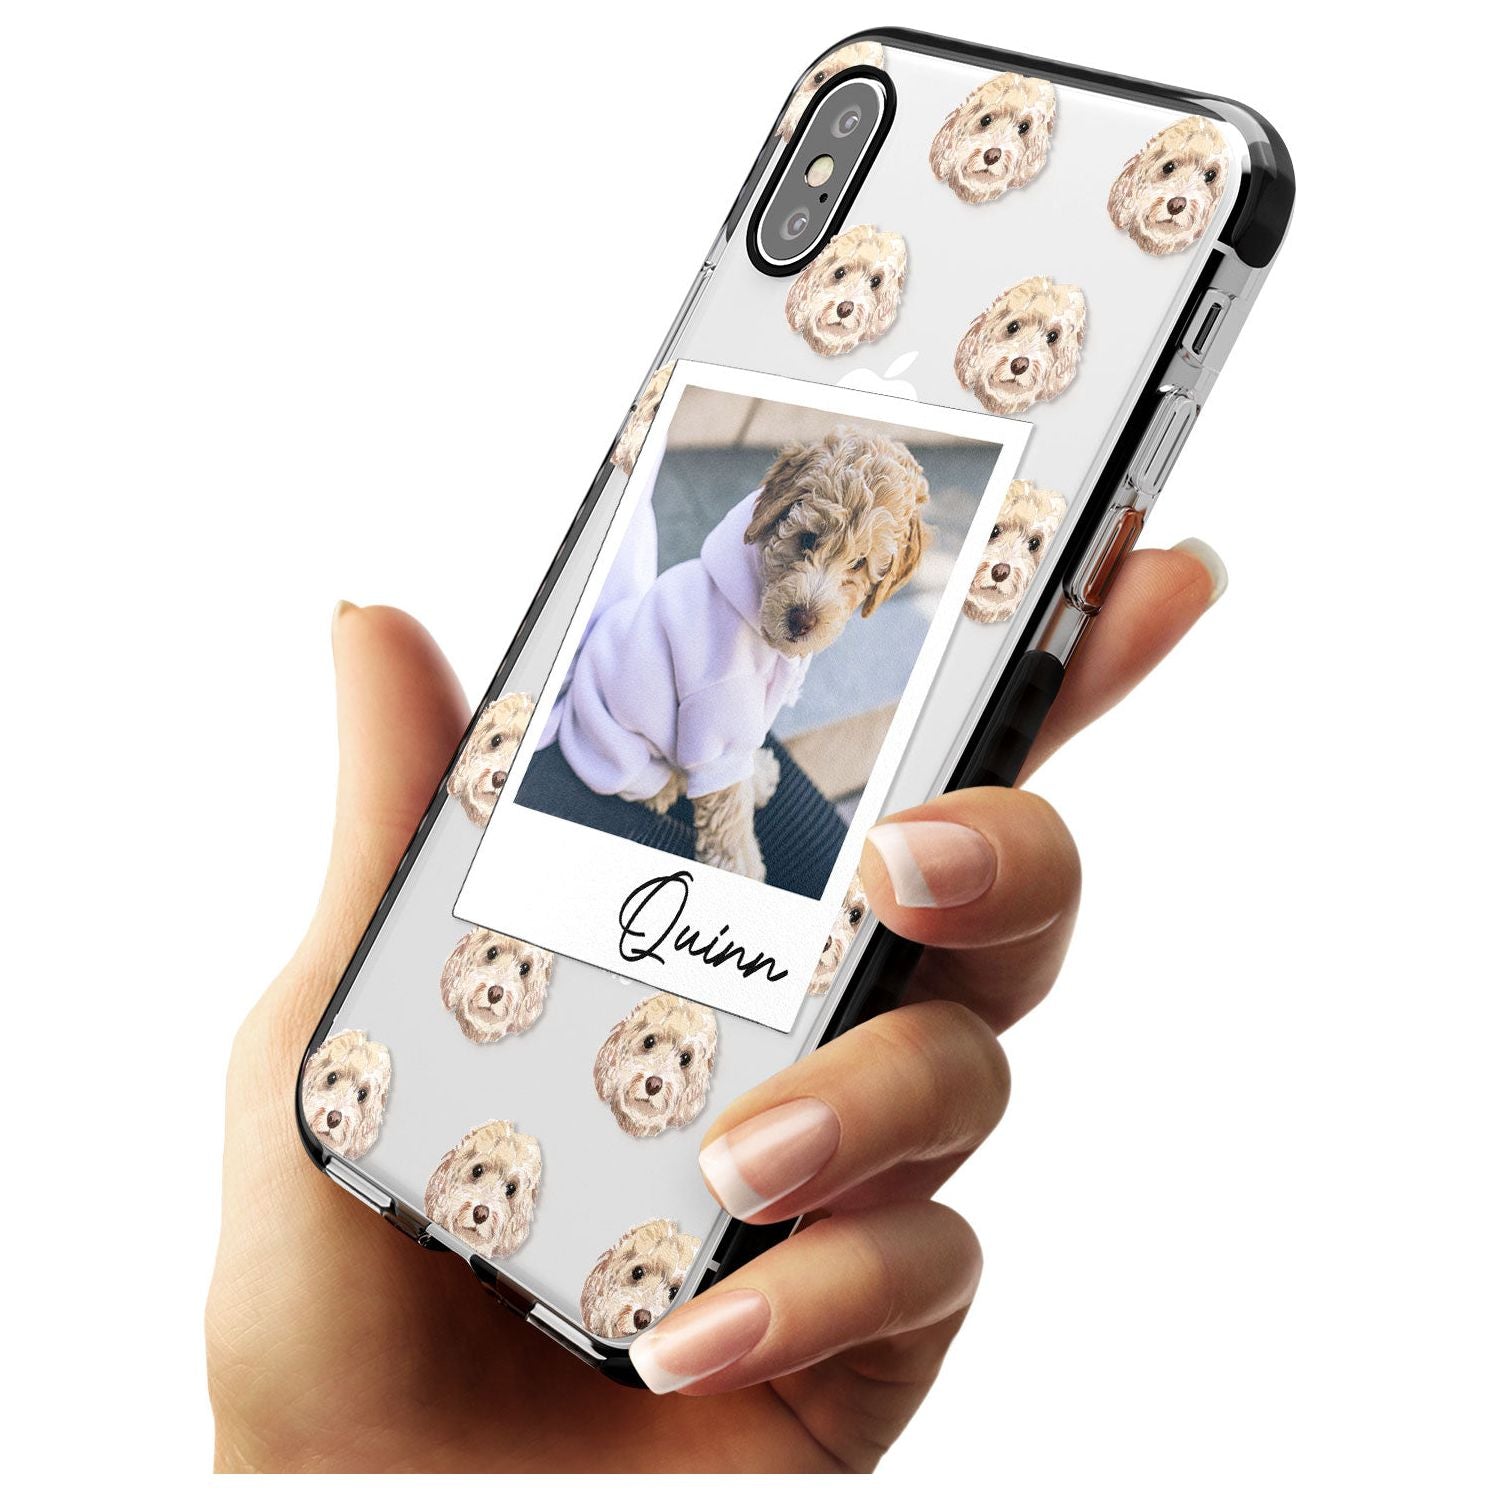 Cockapoo, Cream - Custom Dog Photo Pink Fade Impact Phone Case for iPhone X XS Max XR